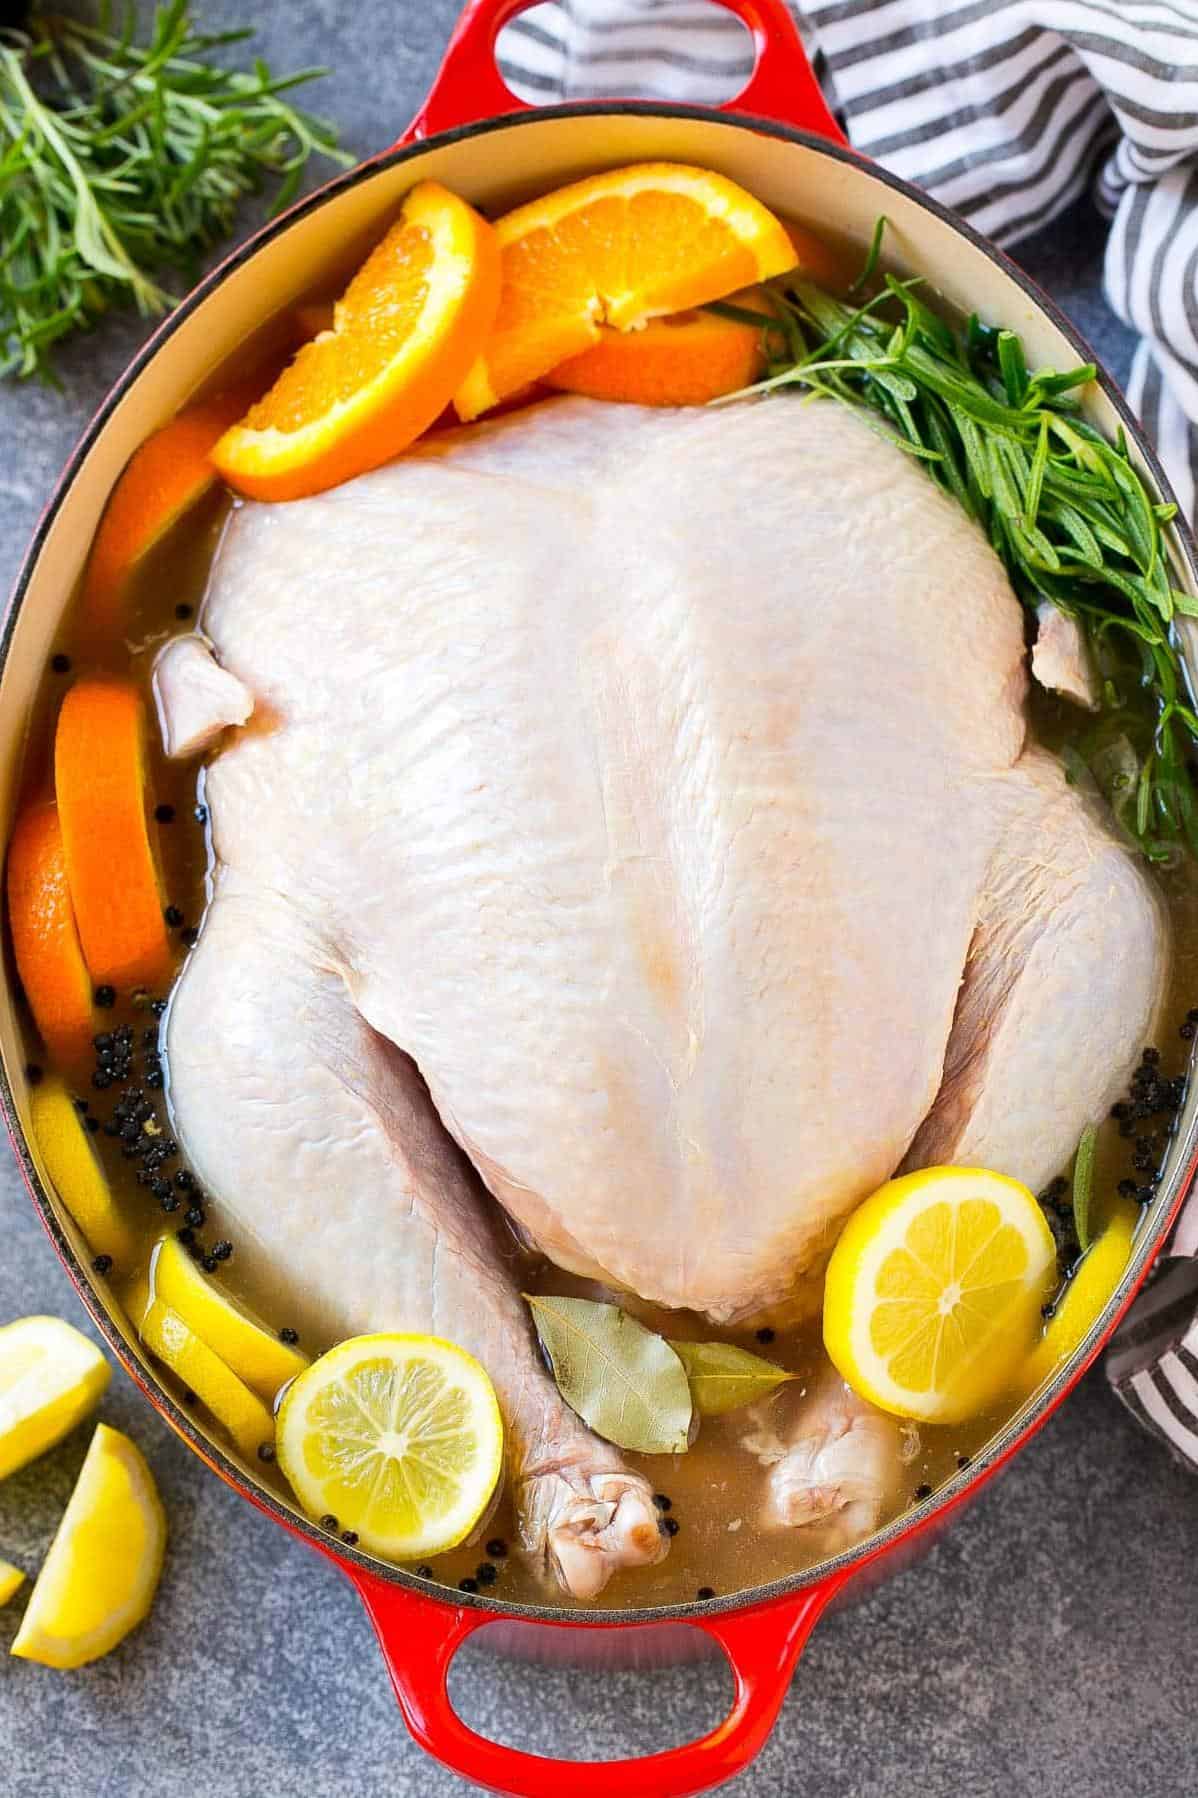  The secret to juicy turkey? Brine it!